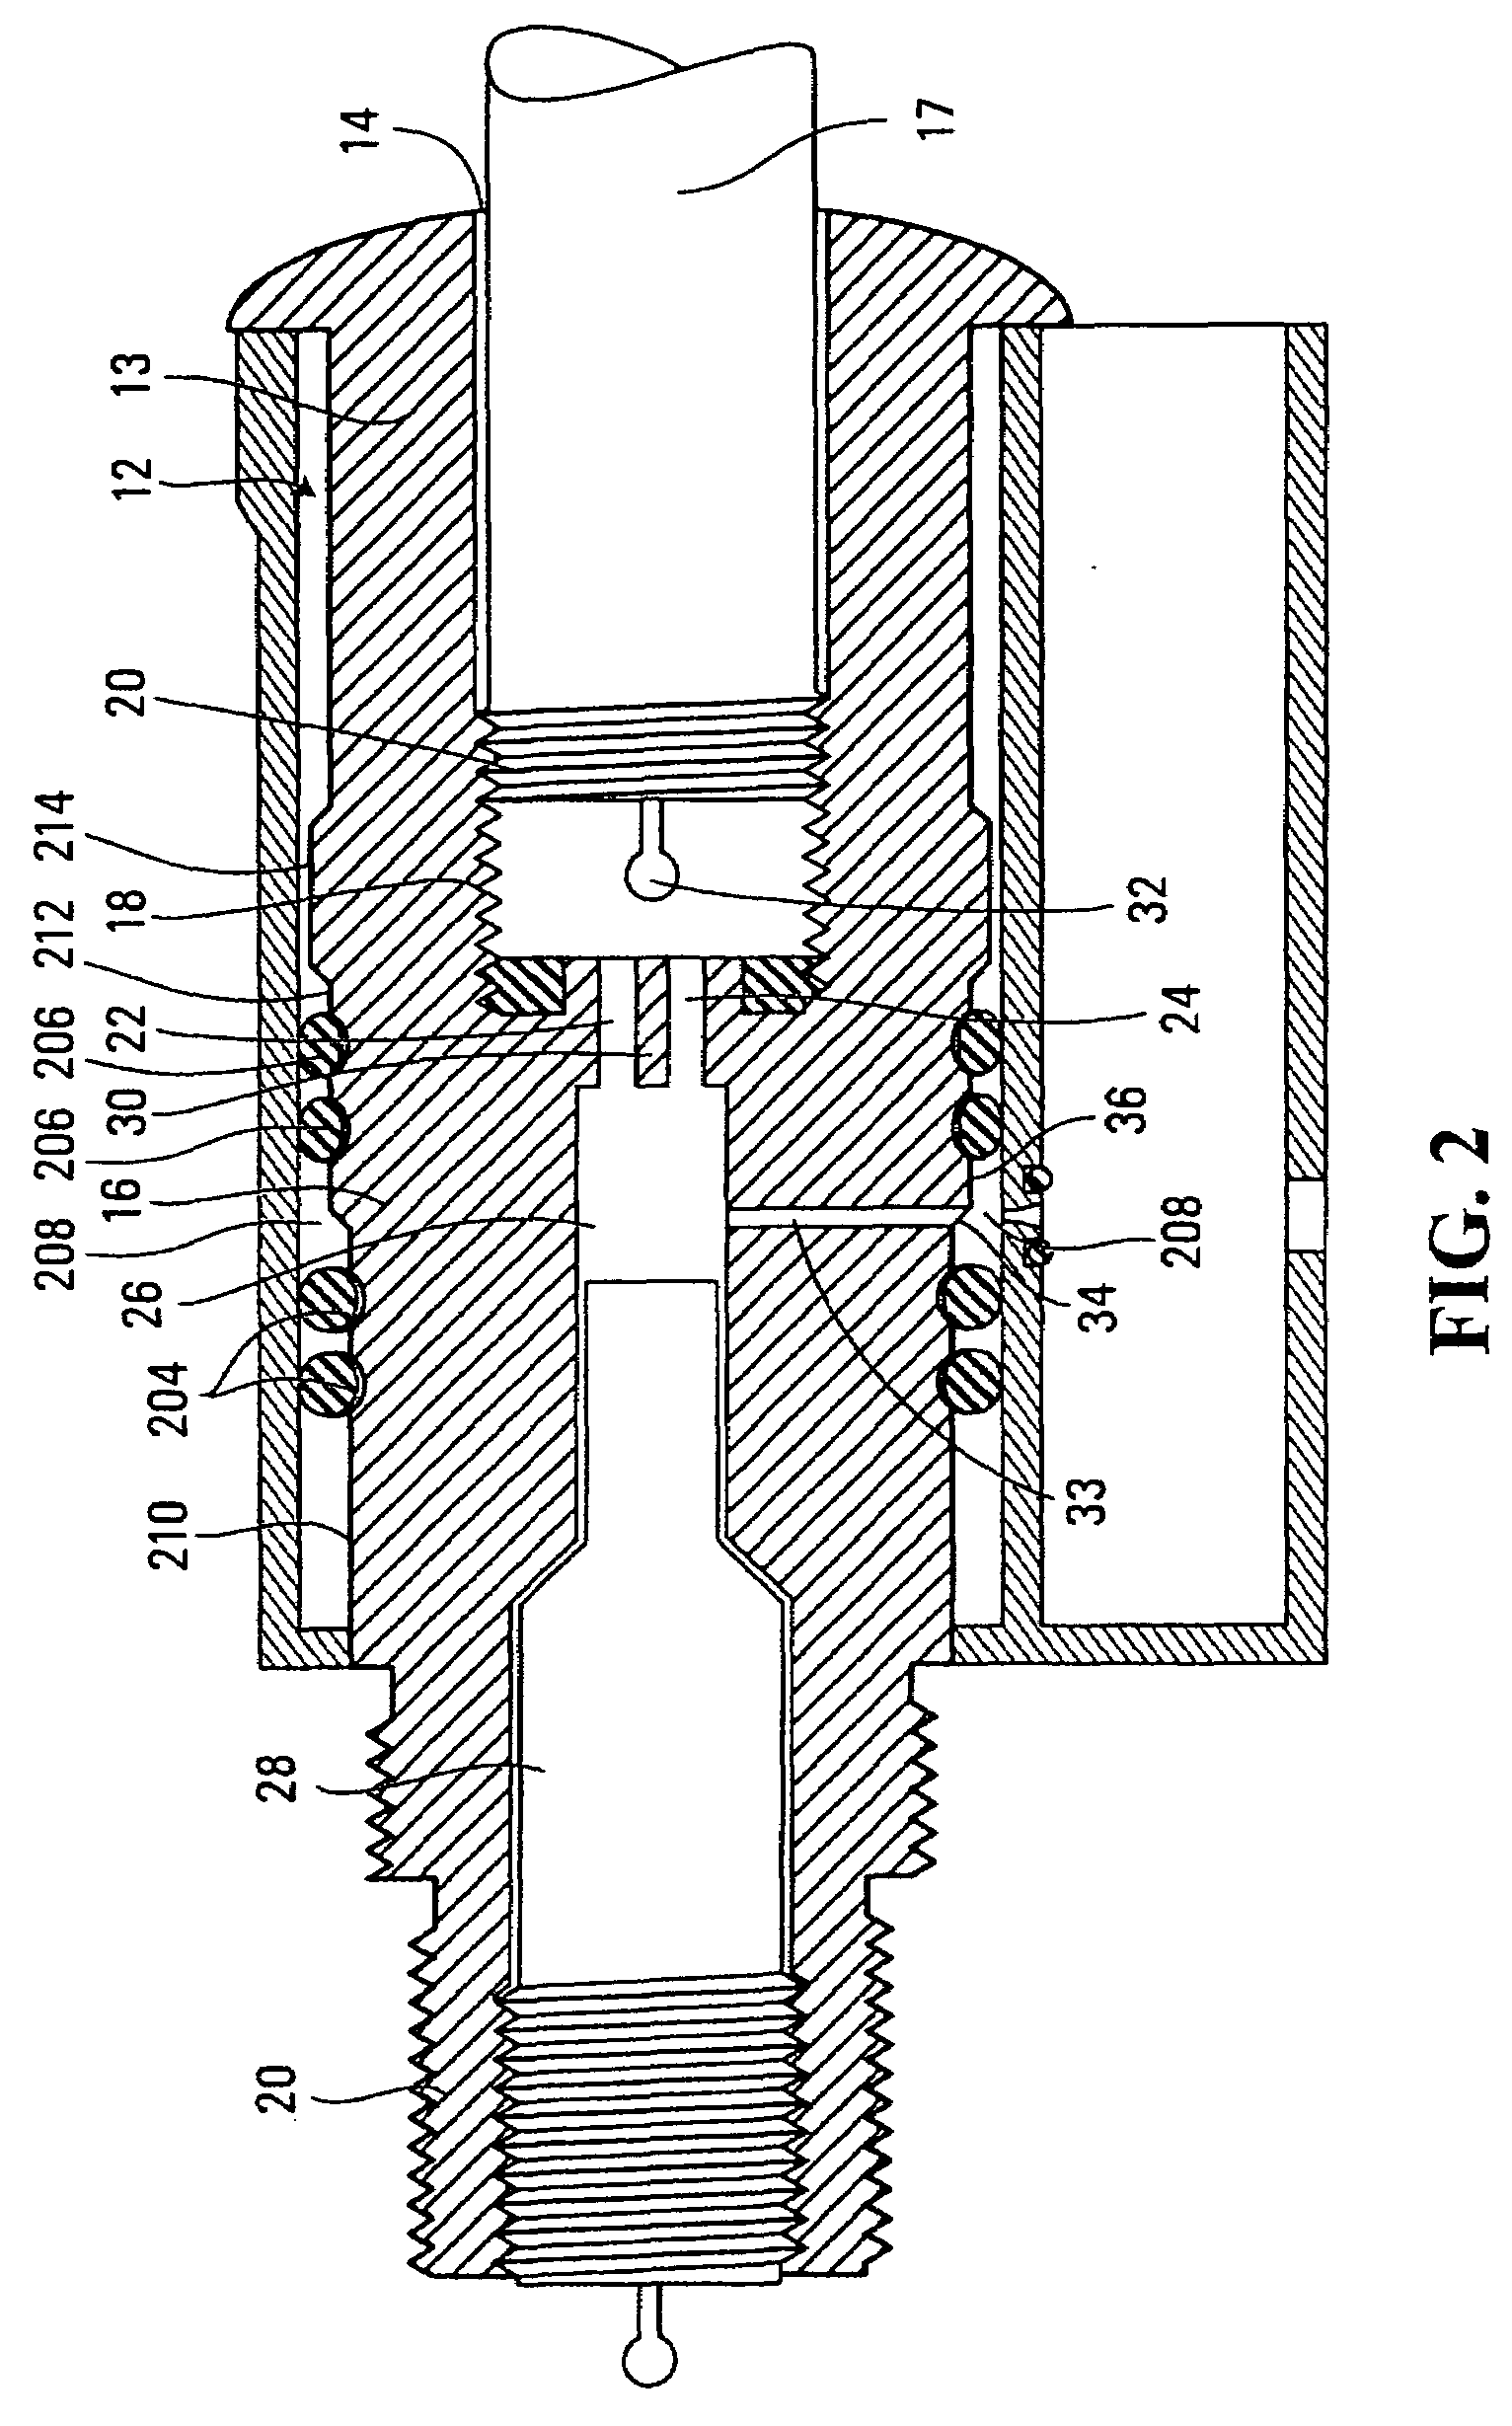 Fluid pressure sensing method and apparatus